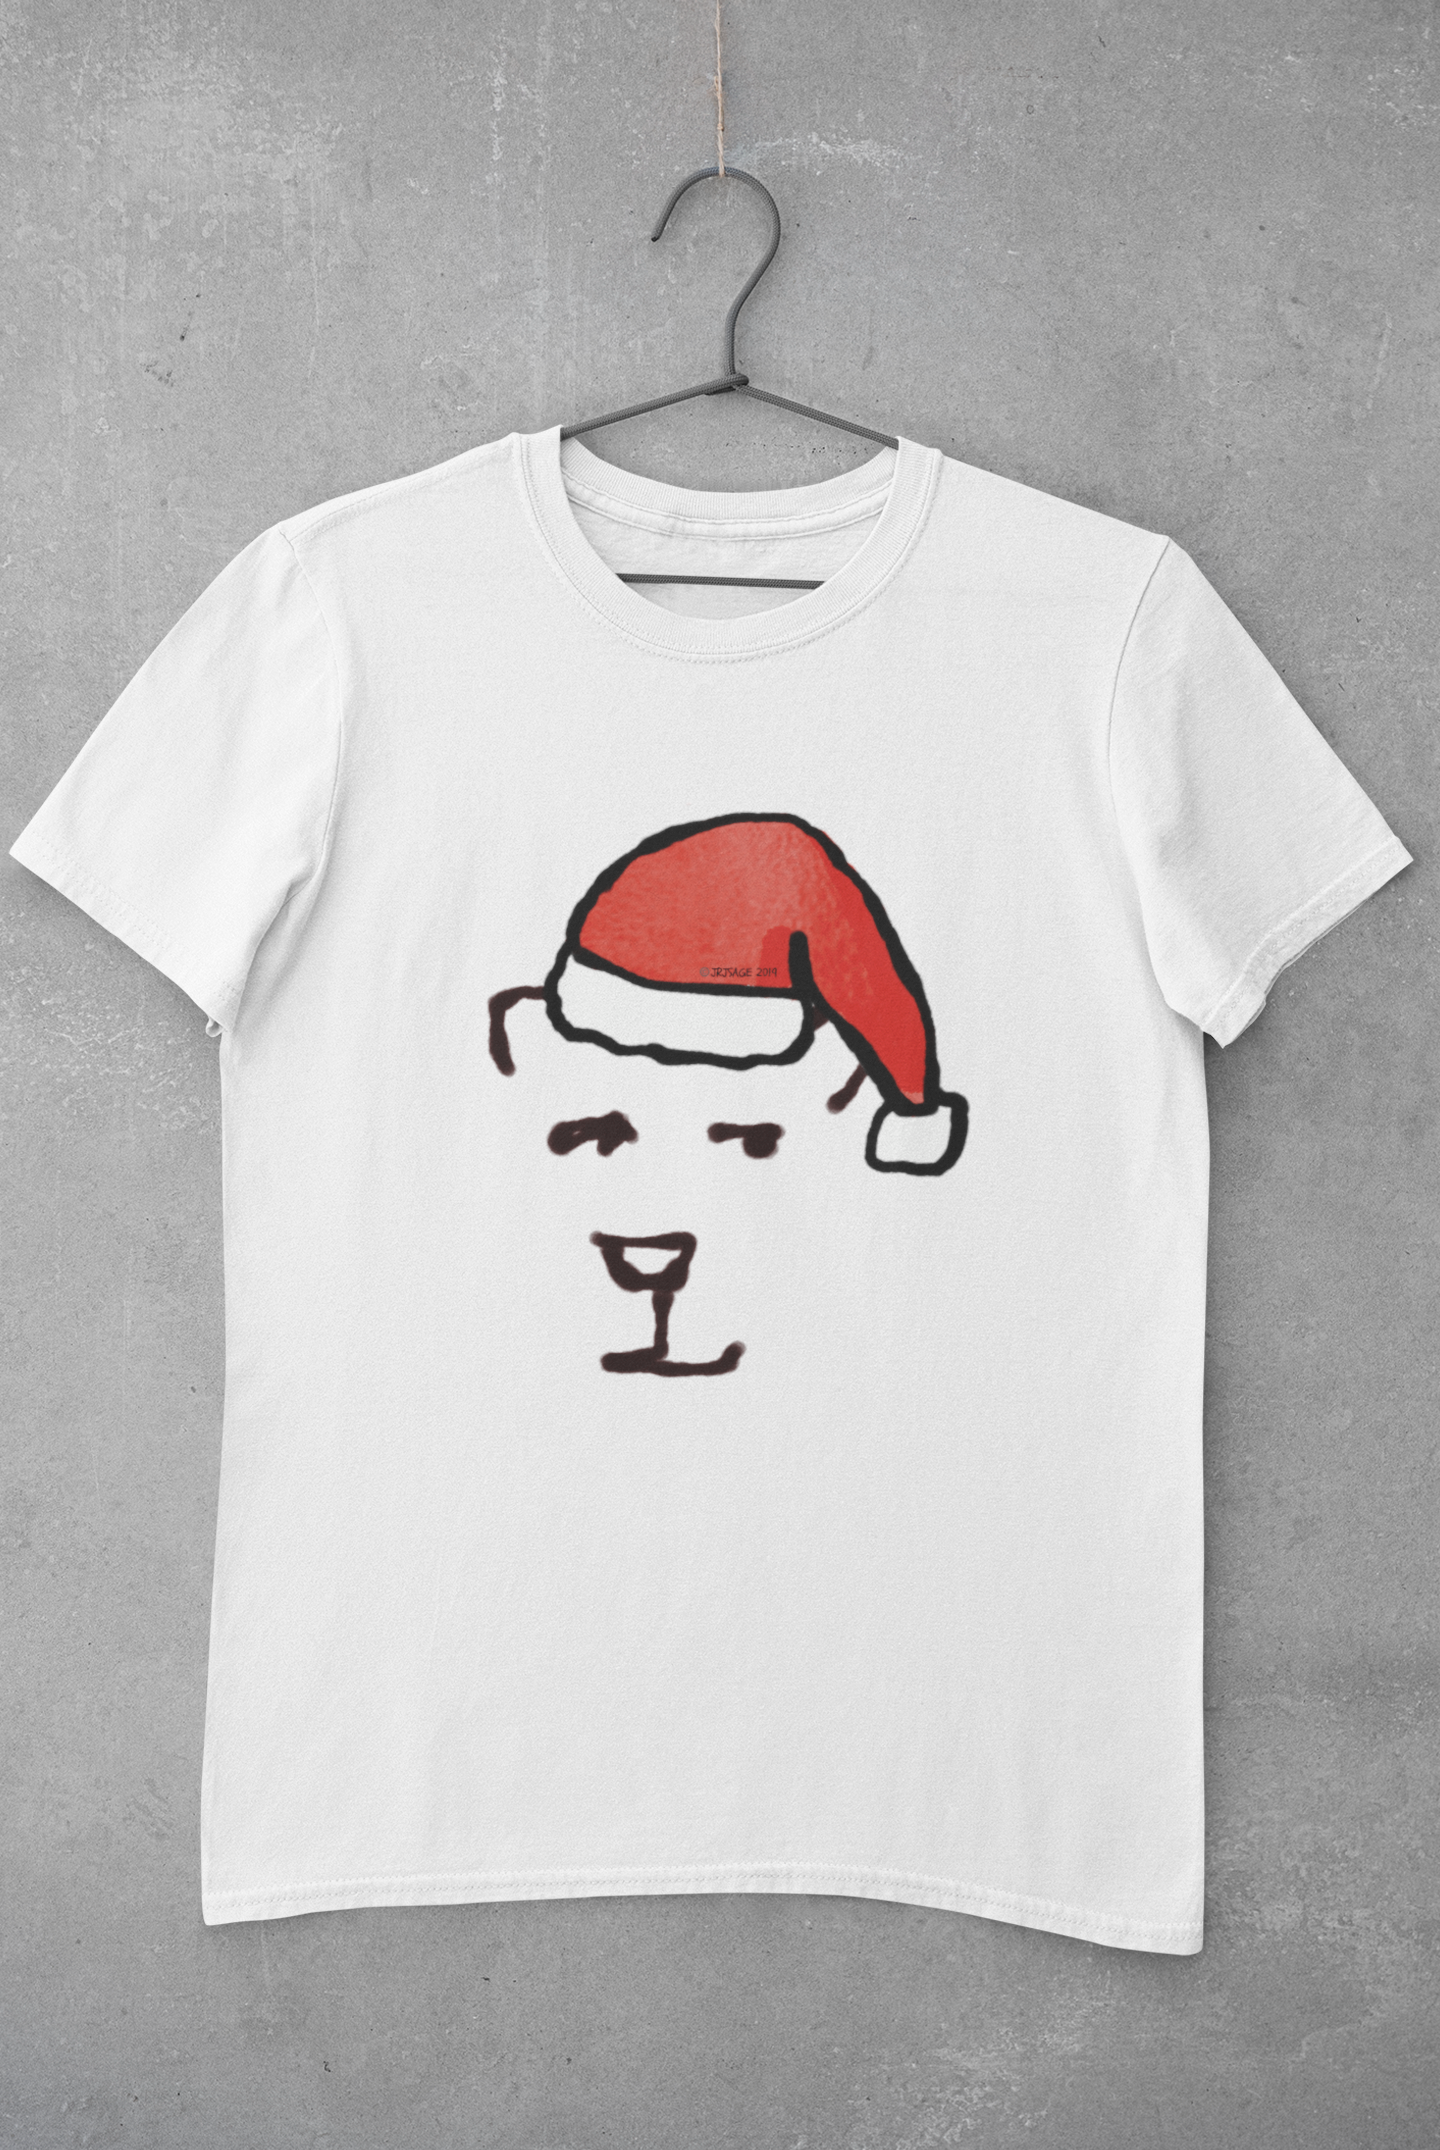 Santa Polar Bear cute Christmas T-shirt illustrated design by Hector and Bone on a Vegan white tee shirt